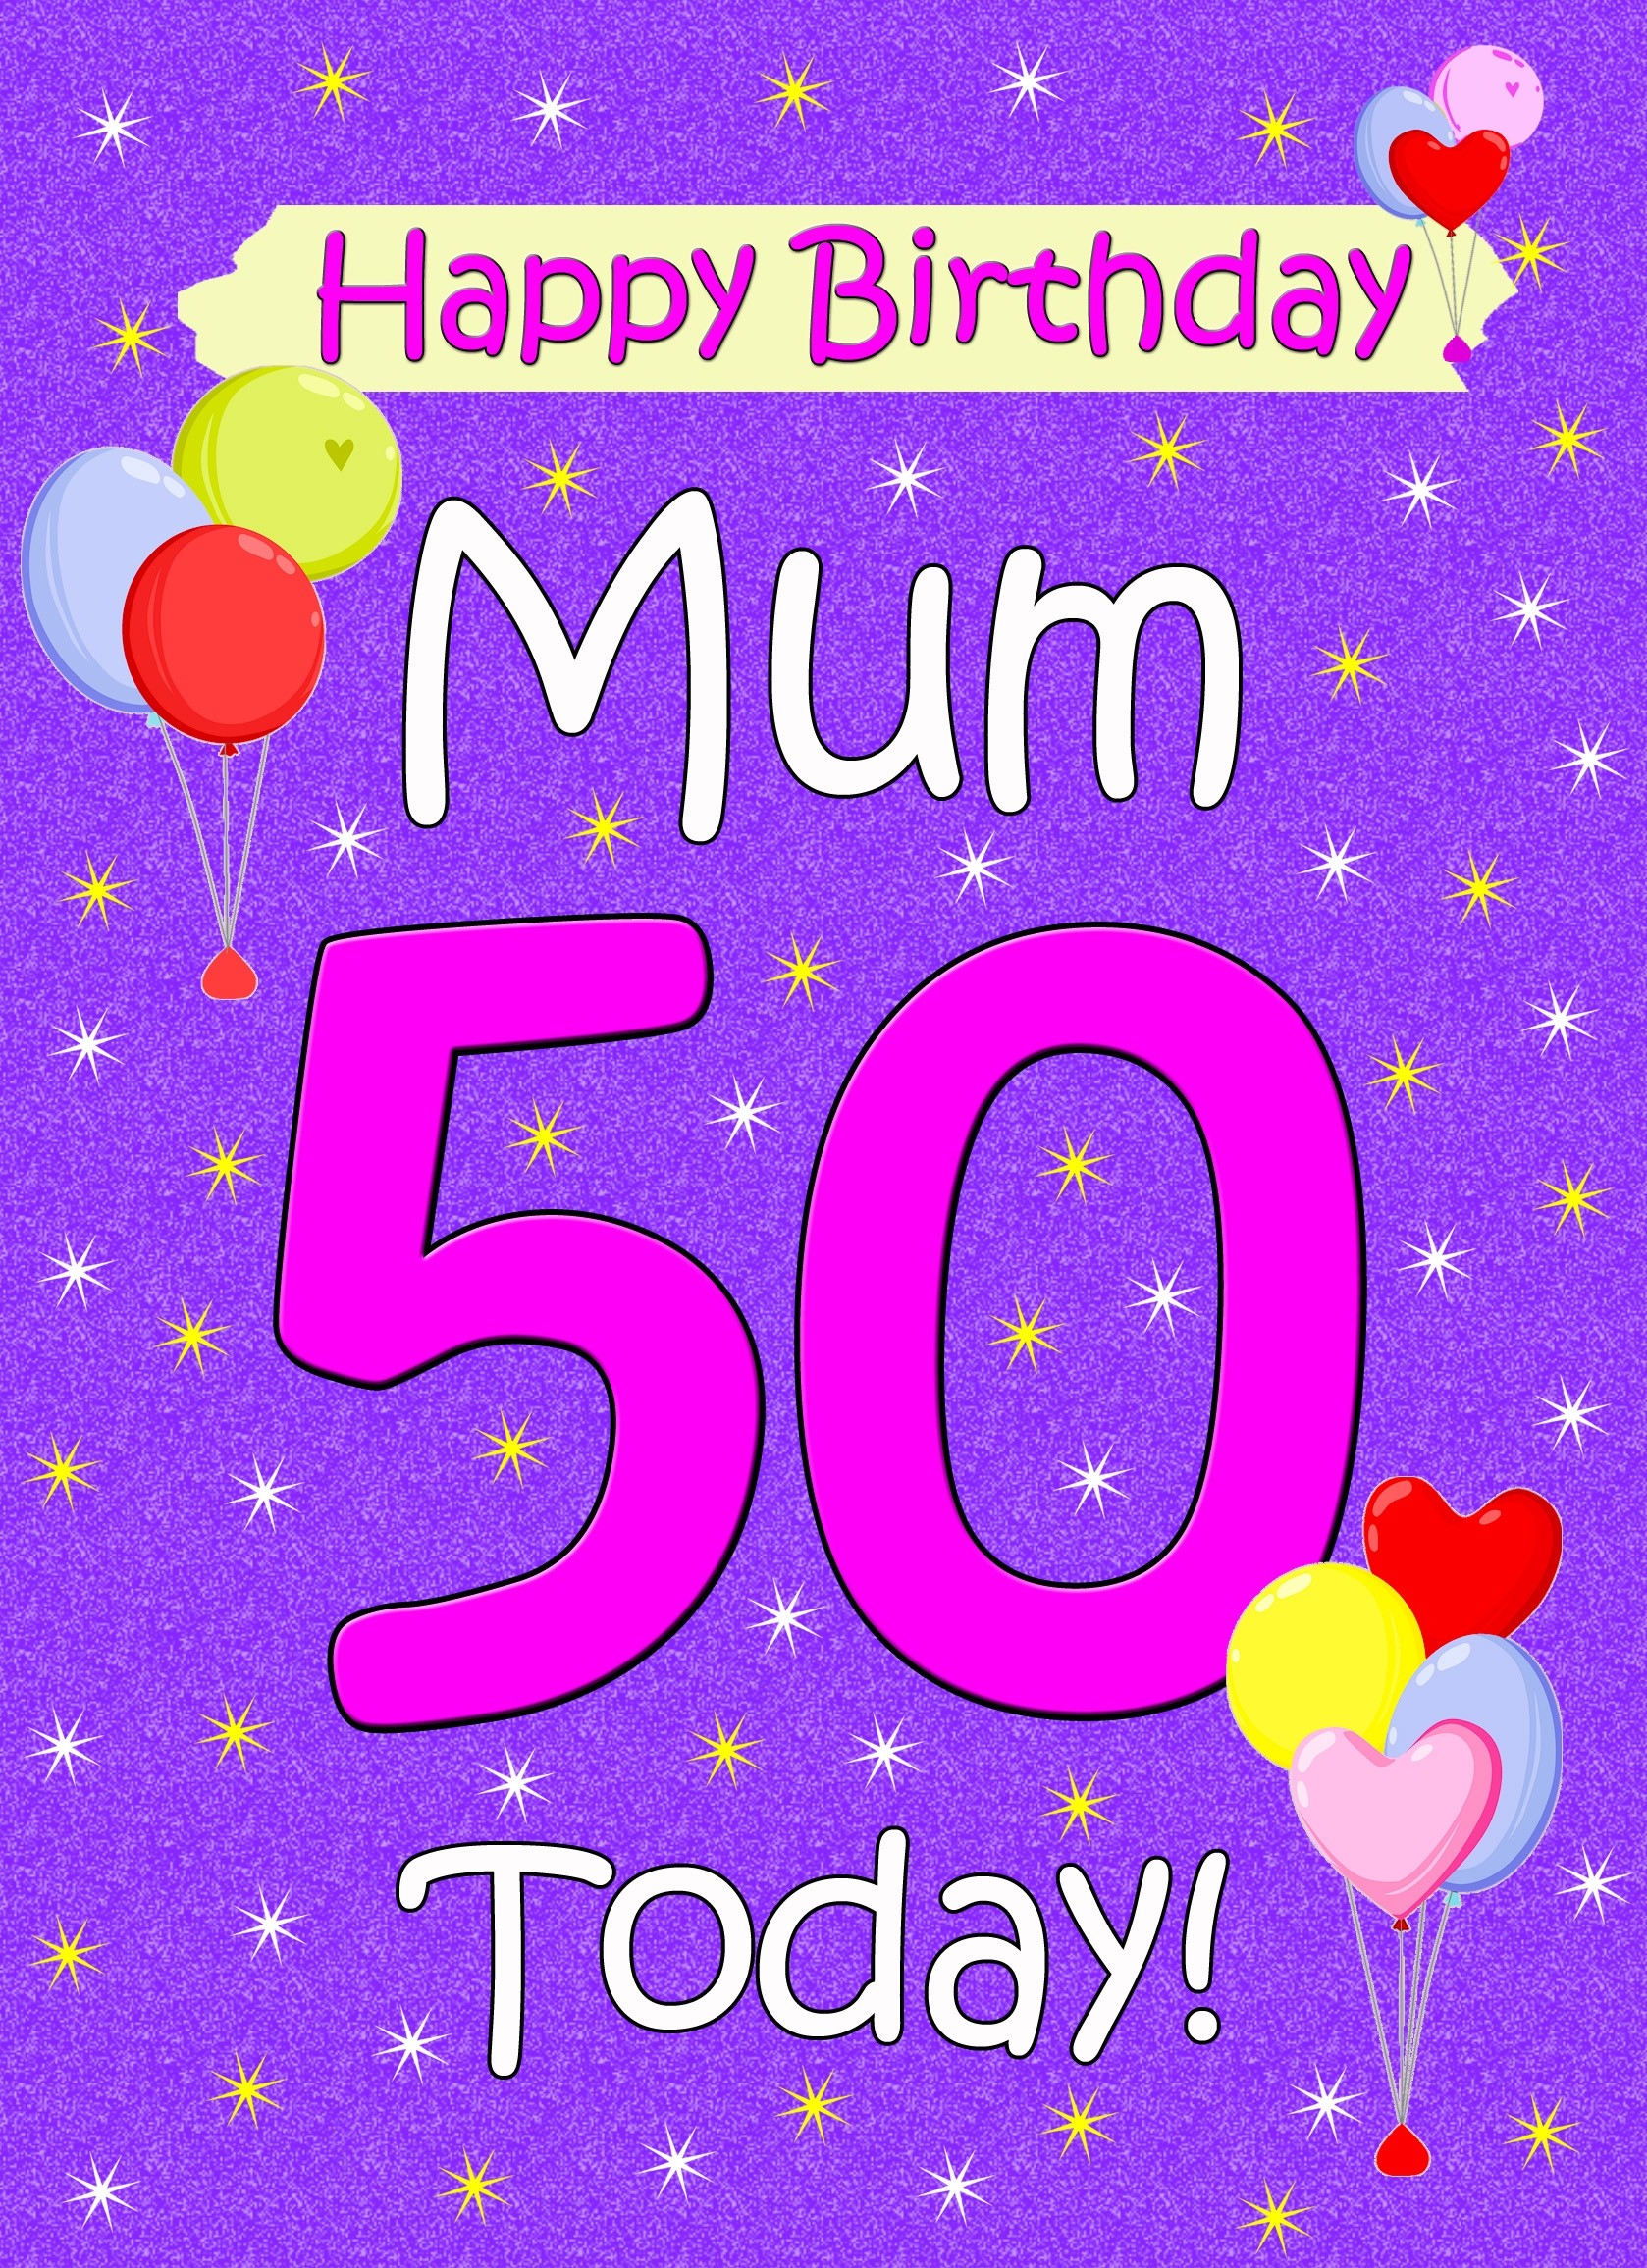 Mum 50th Birthday Card (Lilac)